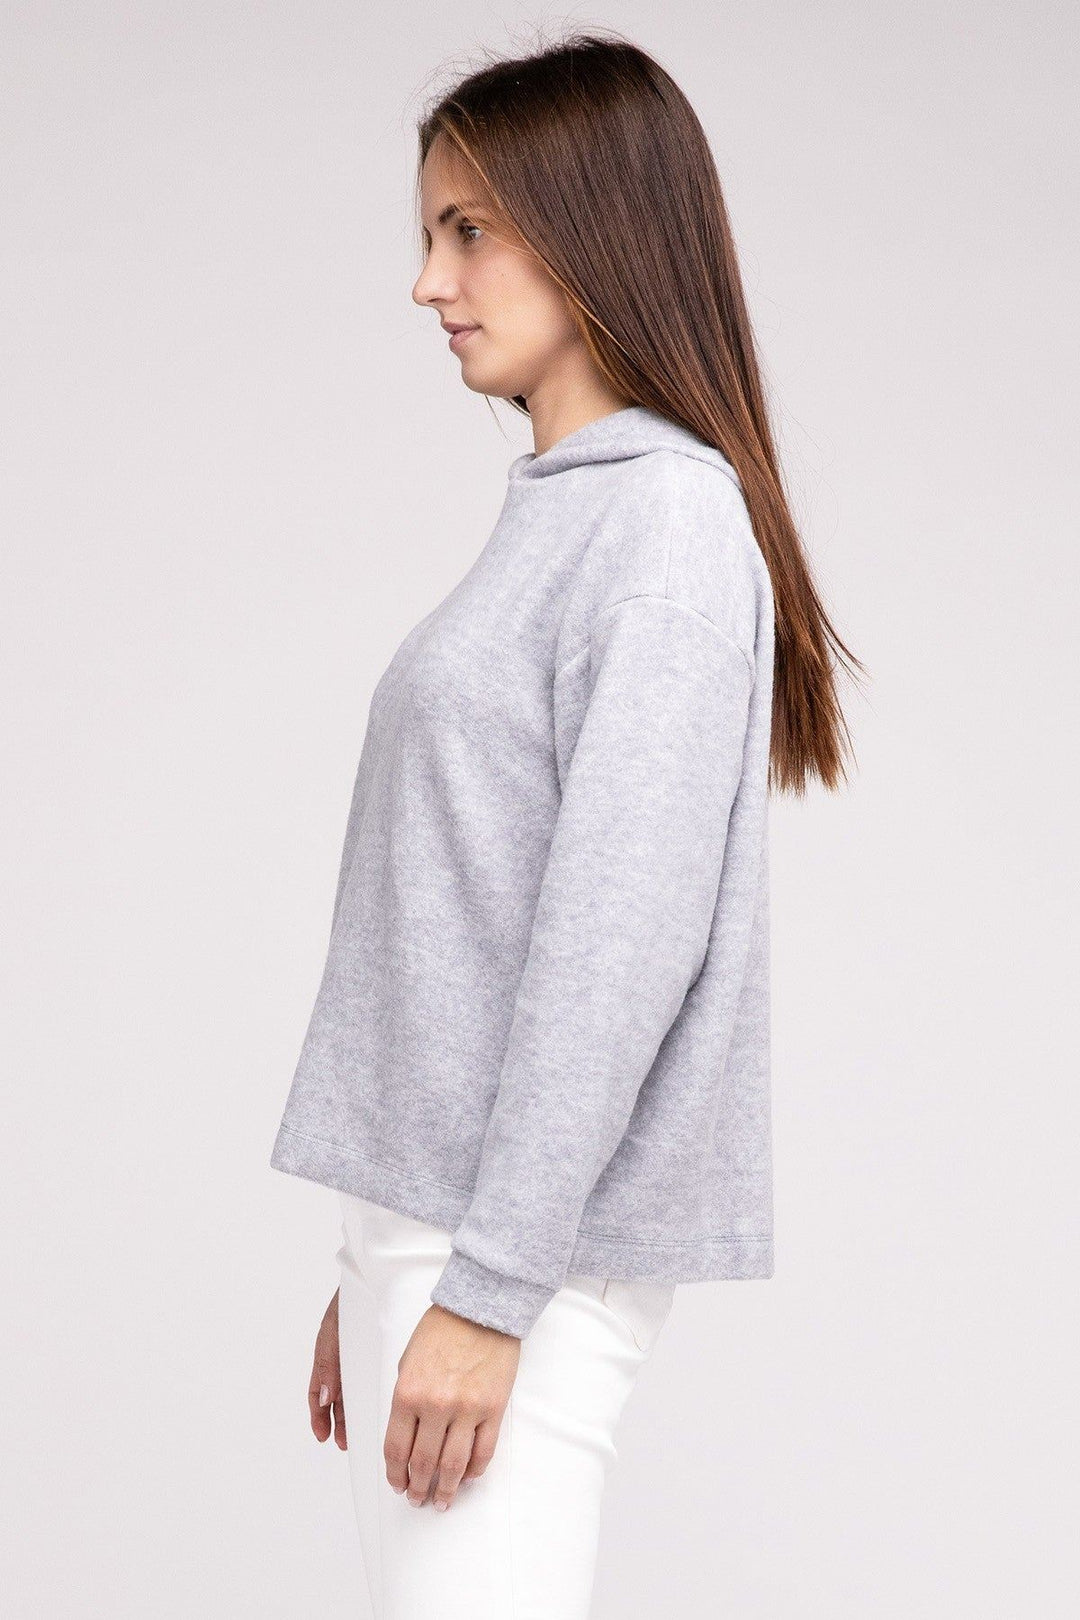 Zenana Hooded Brushed Melange Hacci Sweater - Inspired Eye Boutique